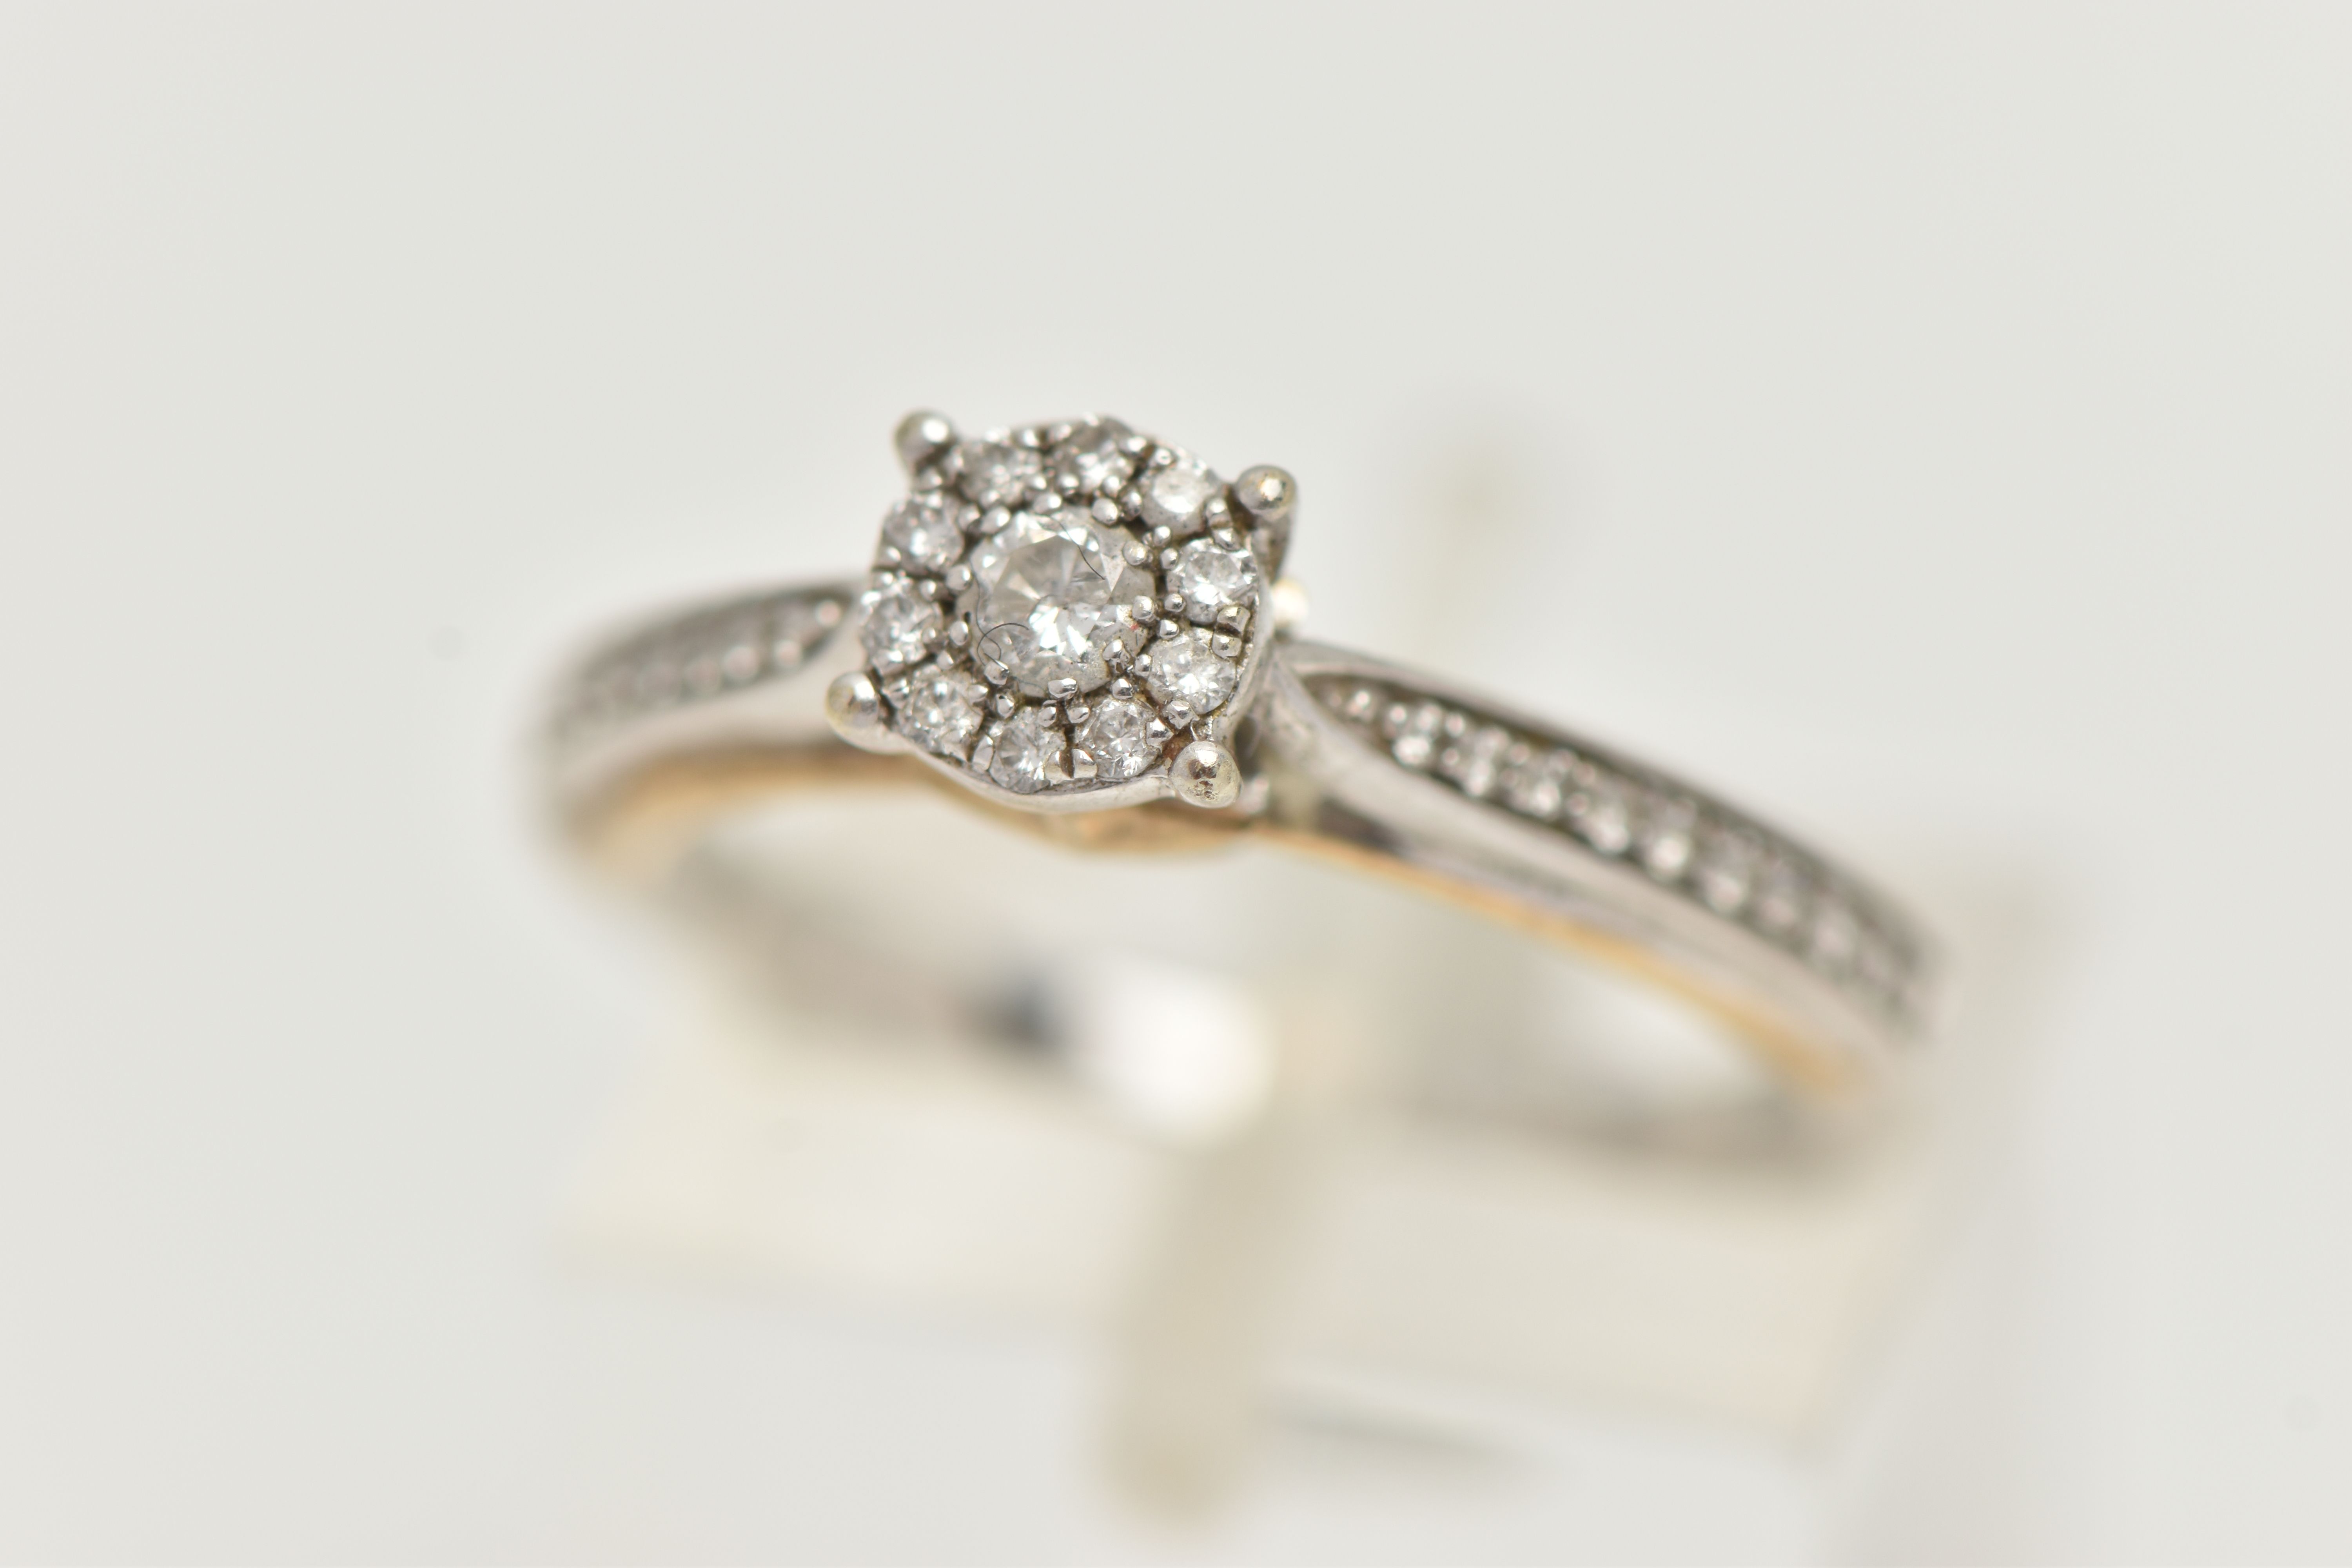 A 9CT WHITE GOLD DIAMOND RING, designed as a central brilliant cut diamond within a brilliant cut